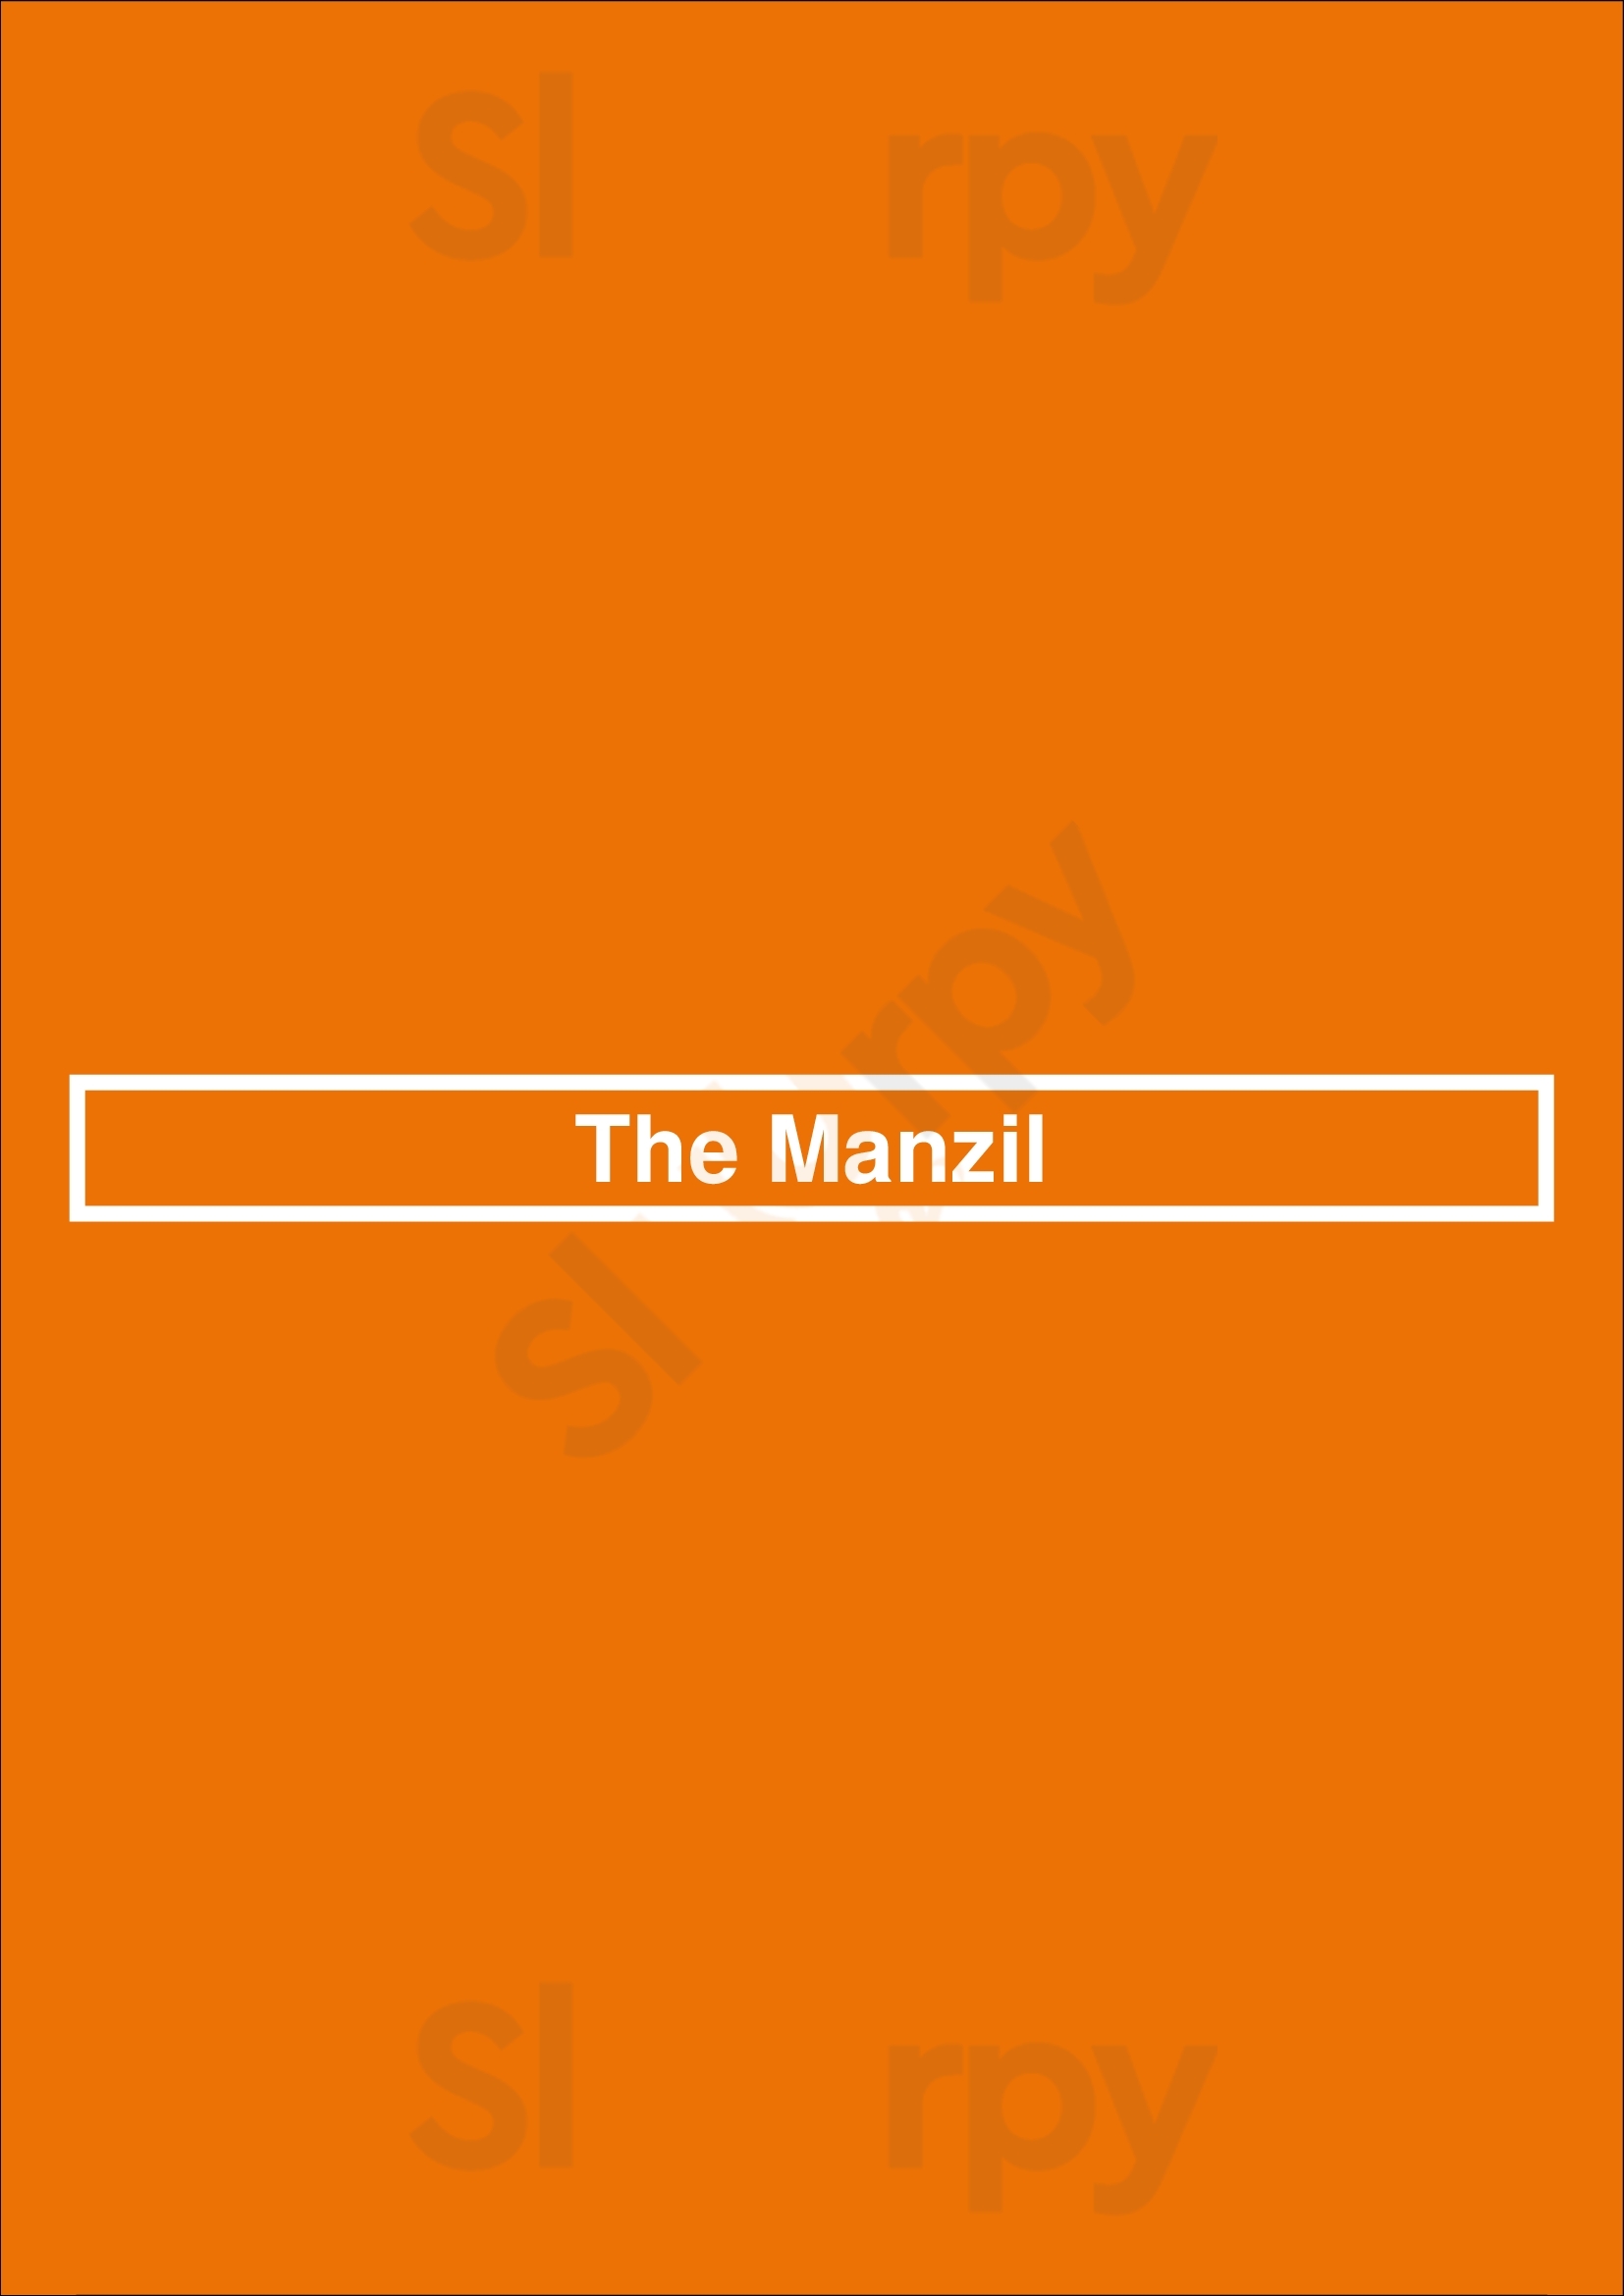 The Manzil Port Glasgow Menu - 1